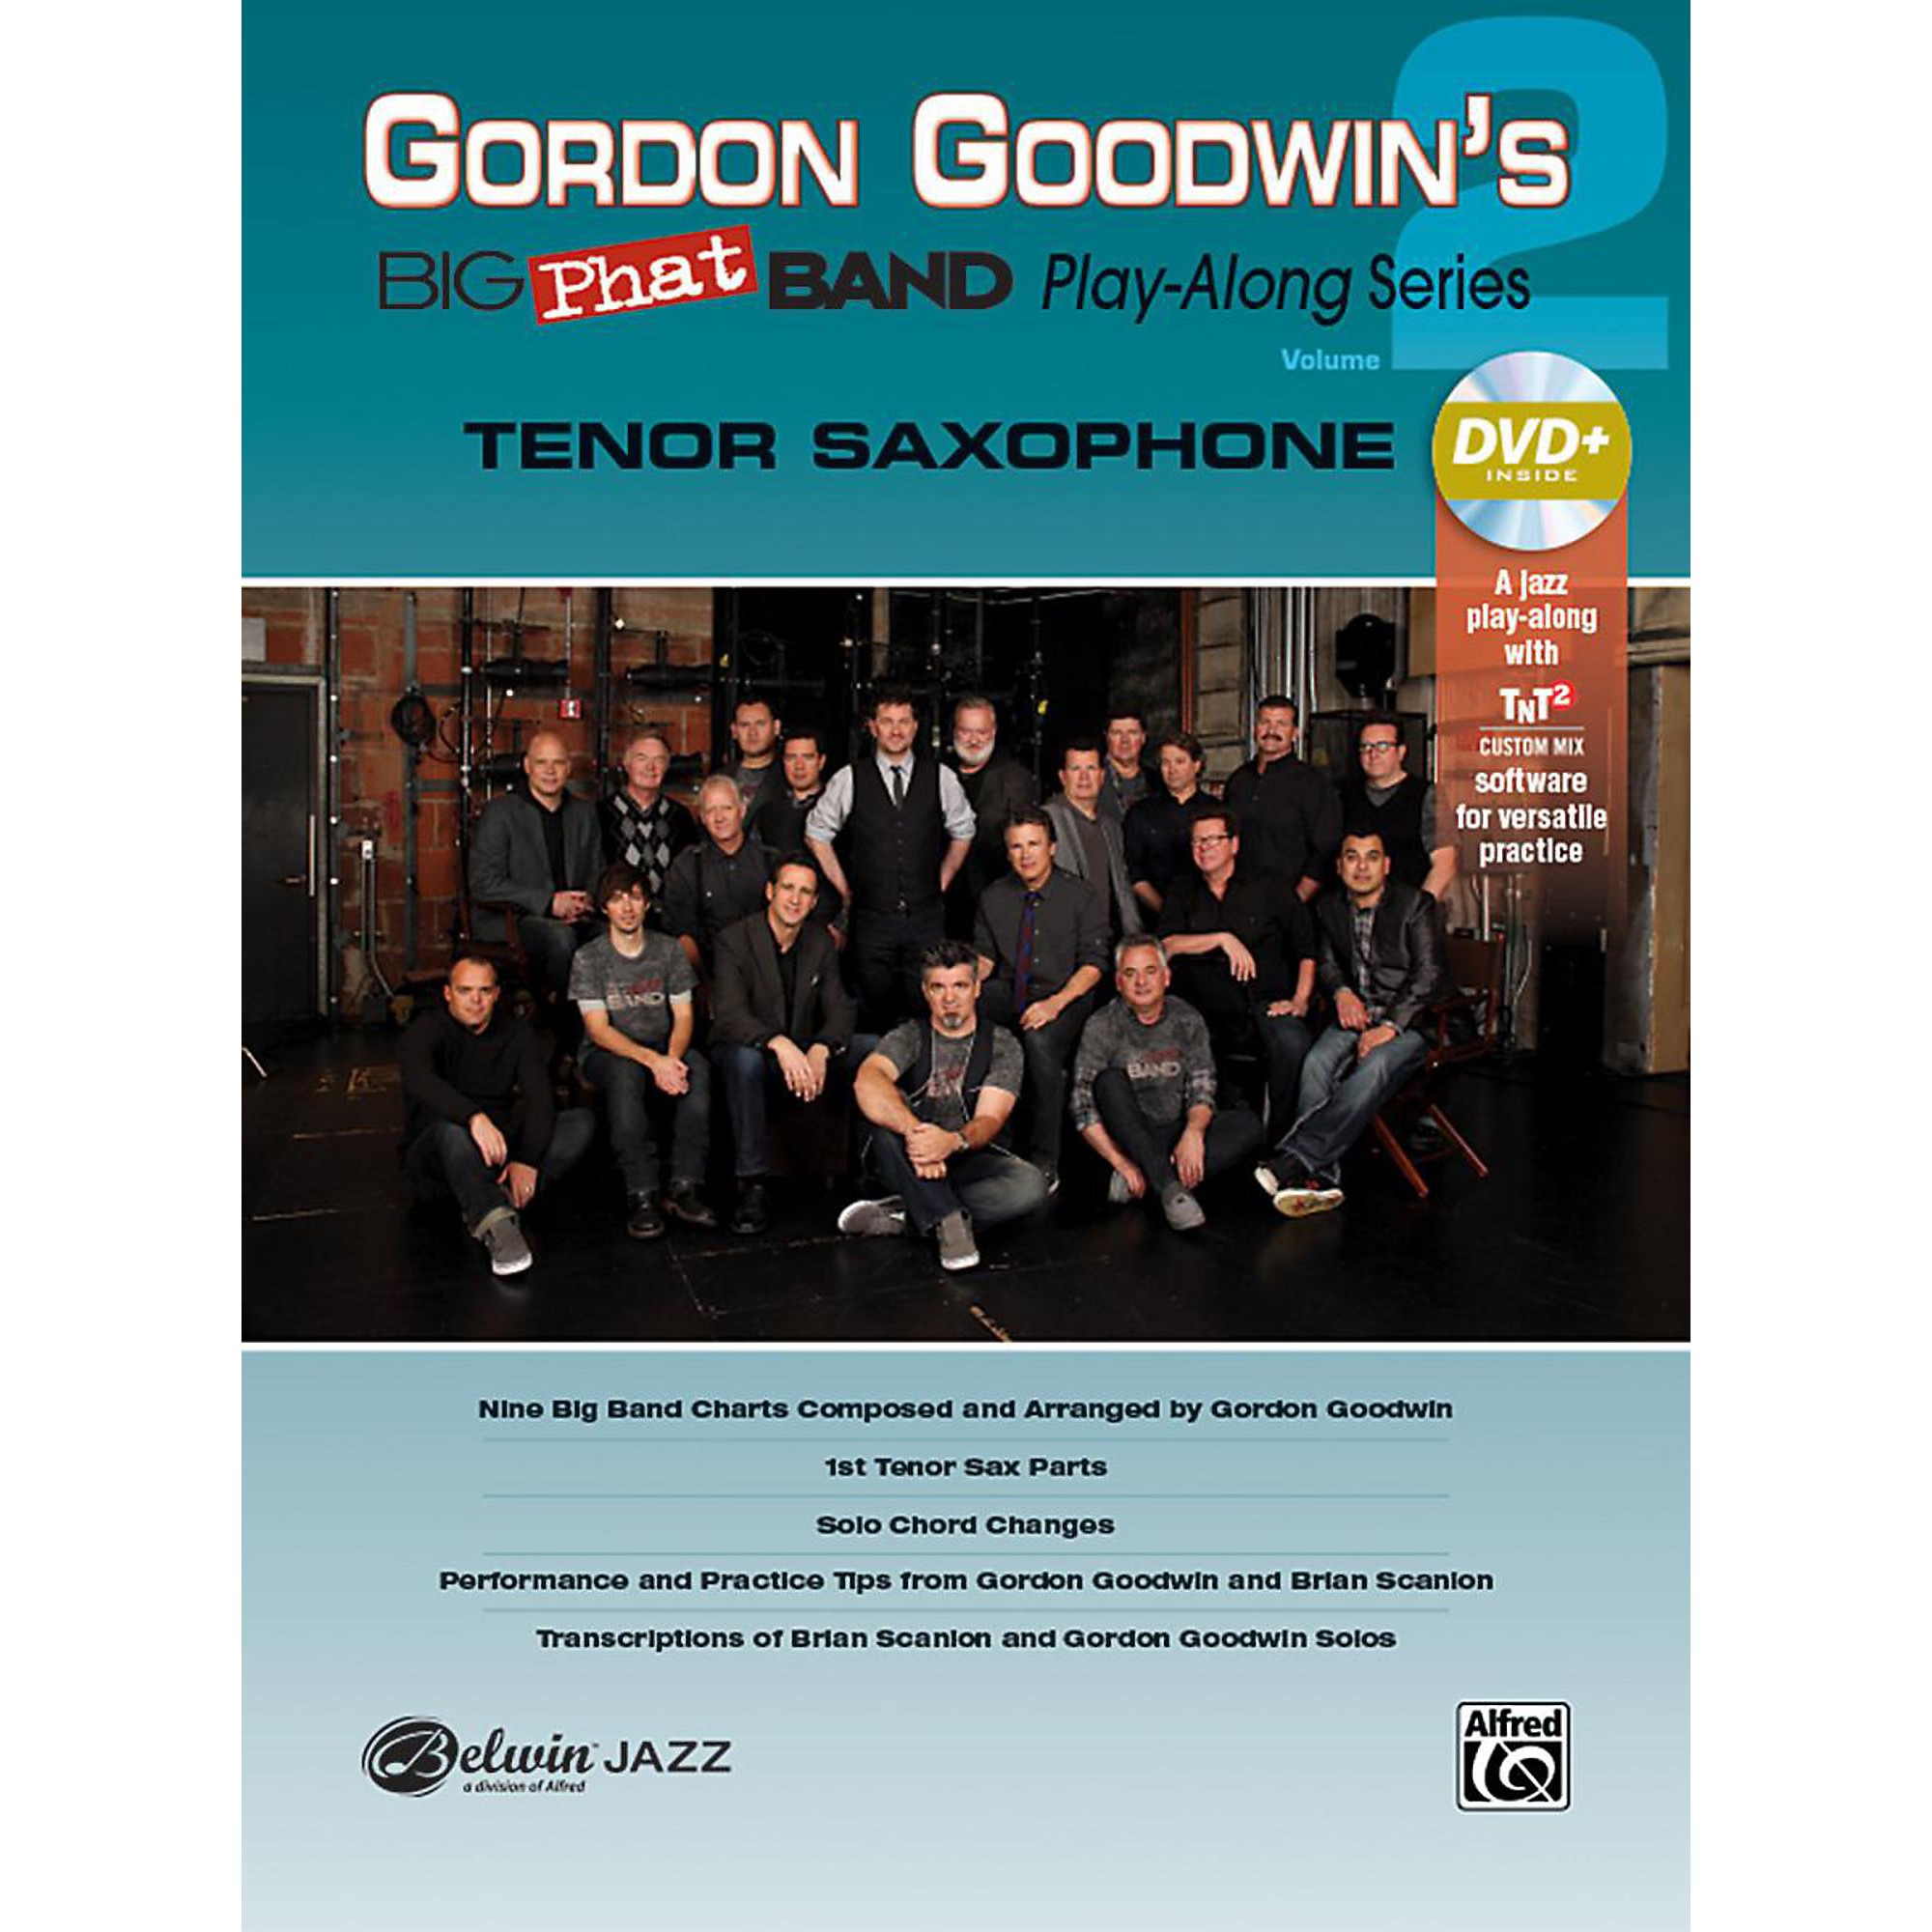 Saxophone　Phat　Big　Tenor　Play-Along　Series　Band　Music　Book　Alfred　Arts　Vol.　Gordon　Goodwin's　DVDRom